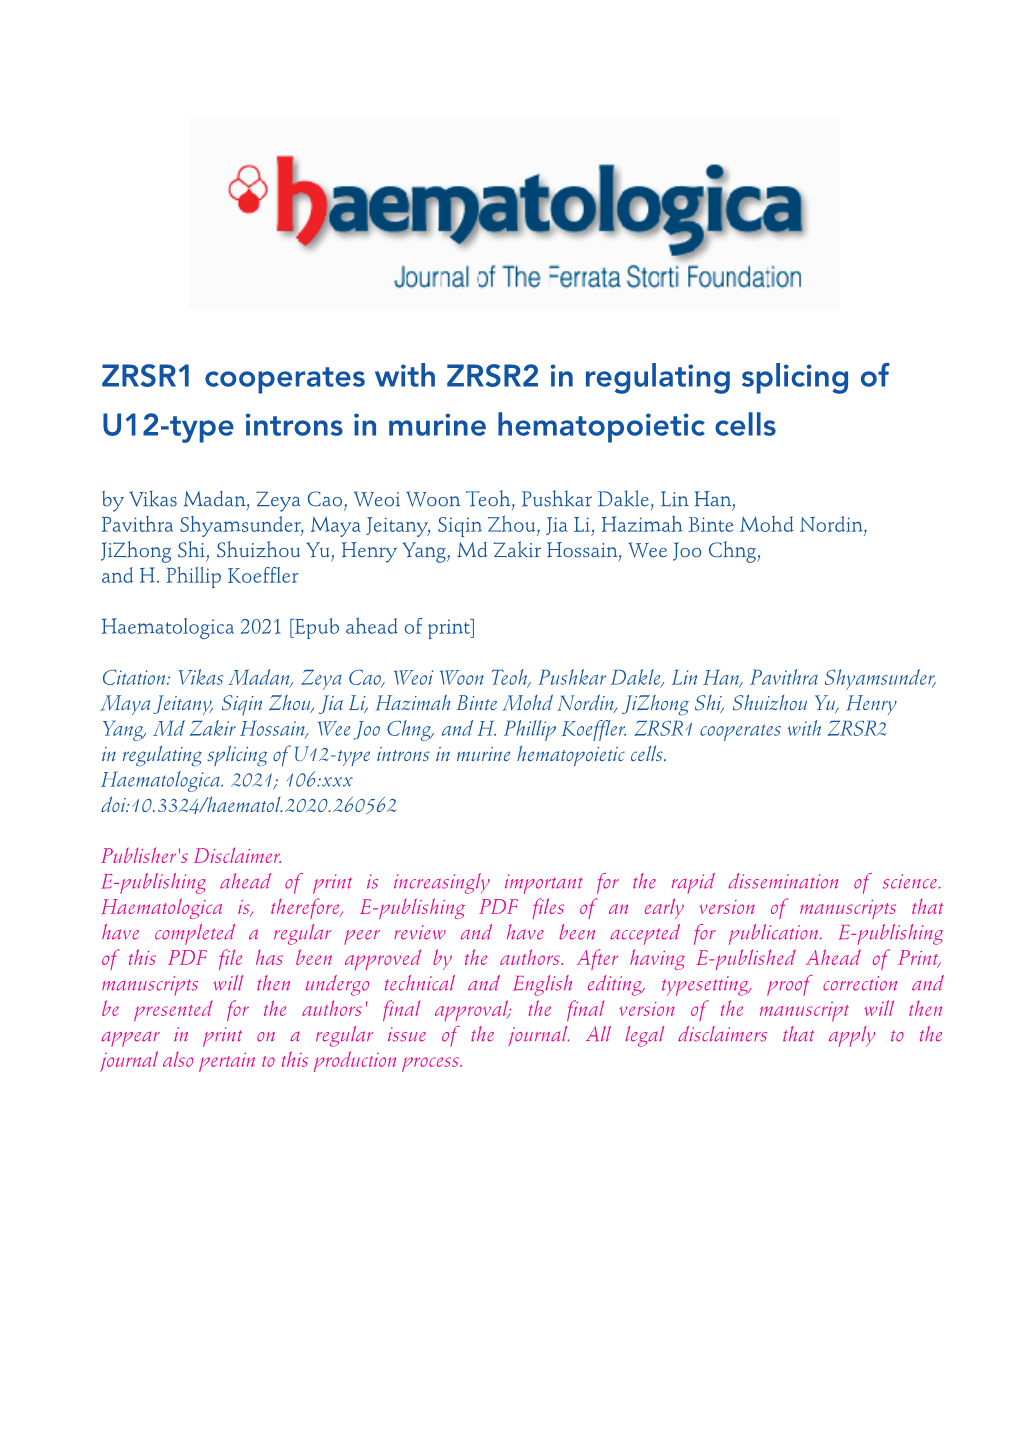 ZRSR1 Cooperates with ZRSR2 in Regulating Splicing of U12-Type Introns in Murine Hematopoietic Cells